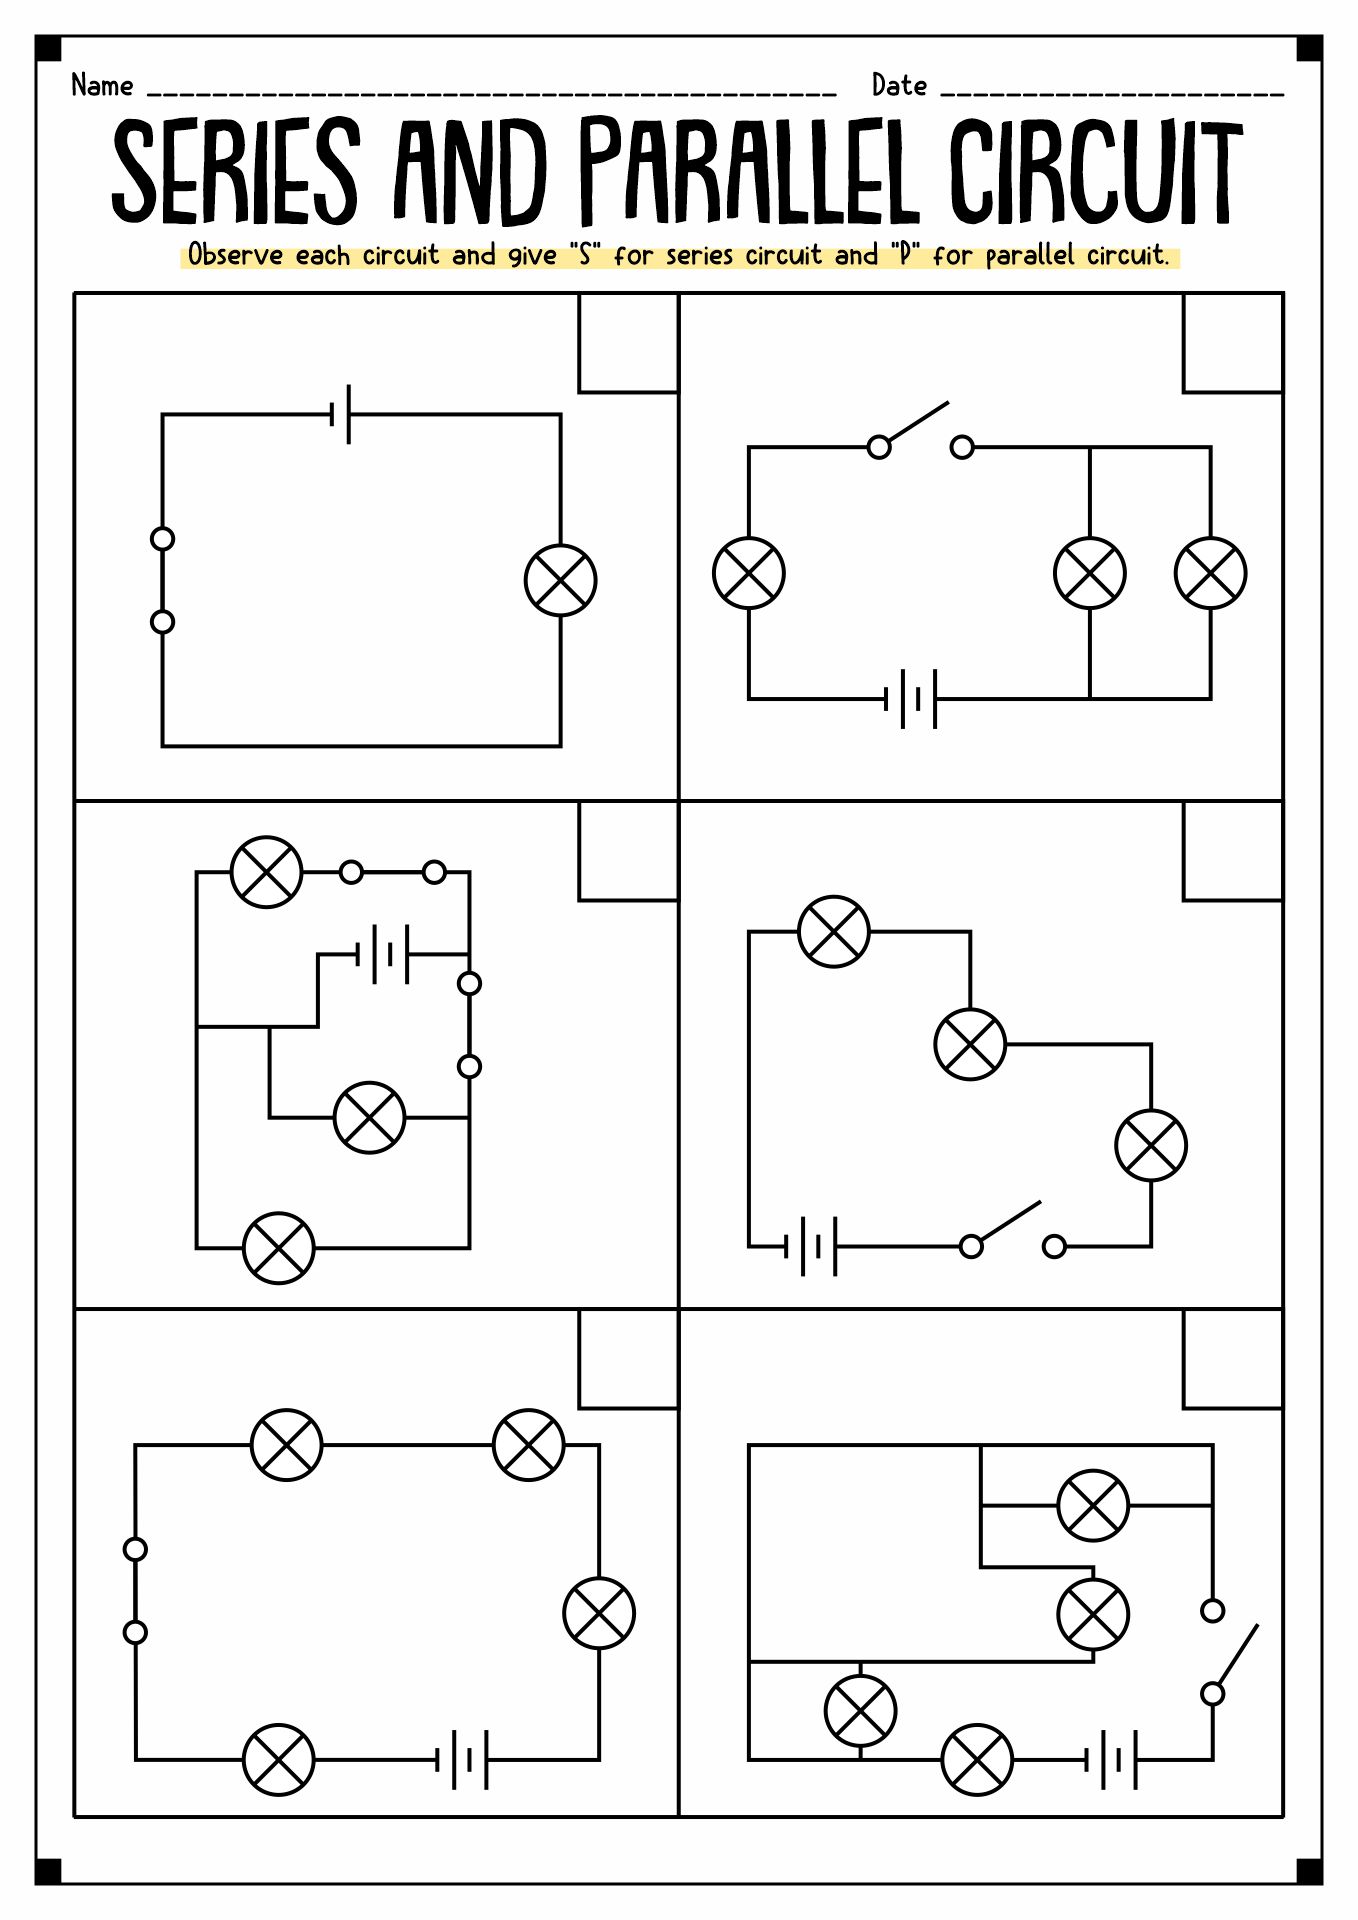 Series and Parallel Circuit Diagram Worksheet Image